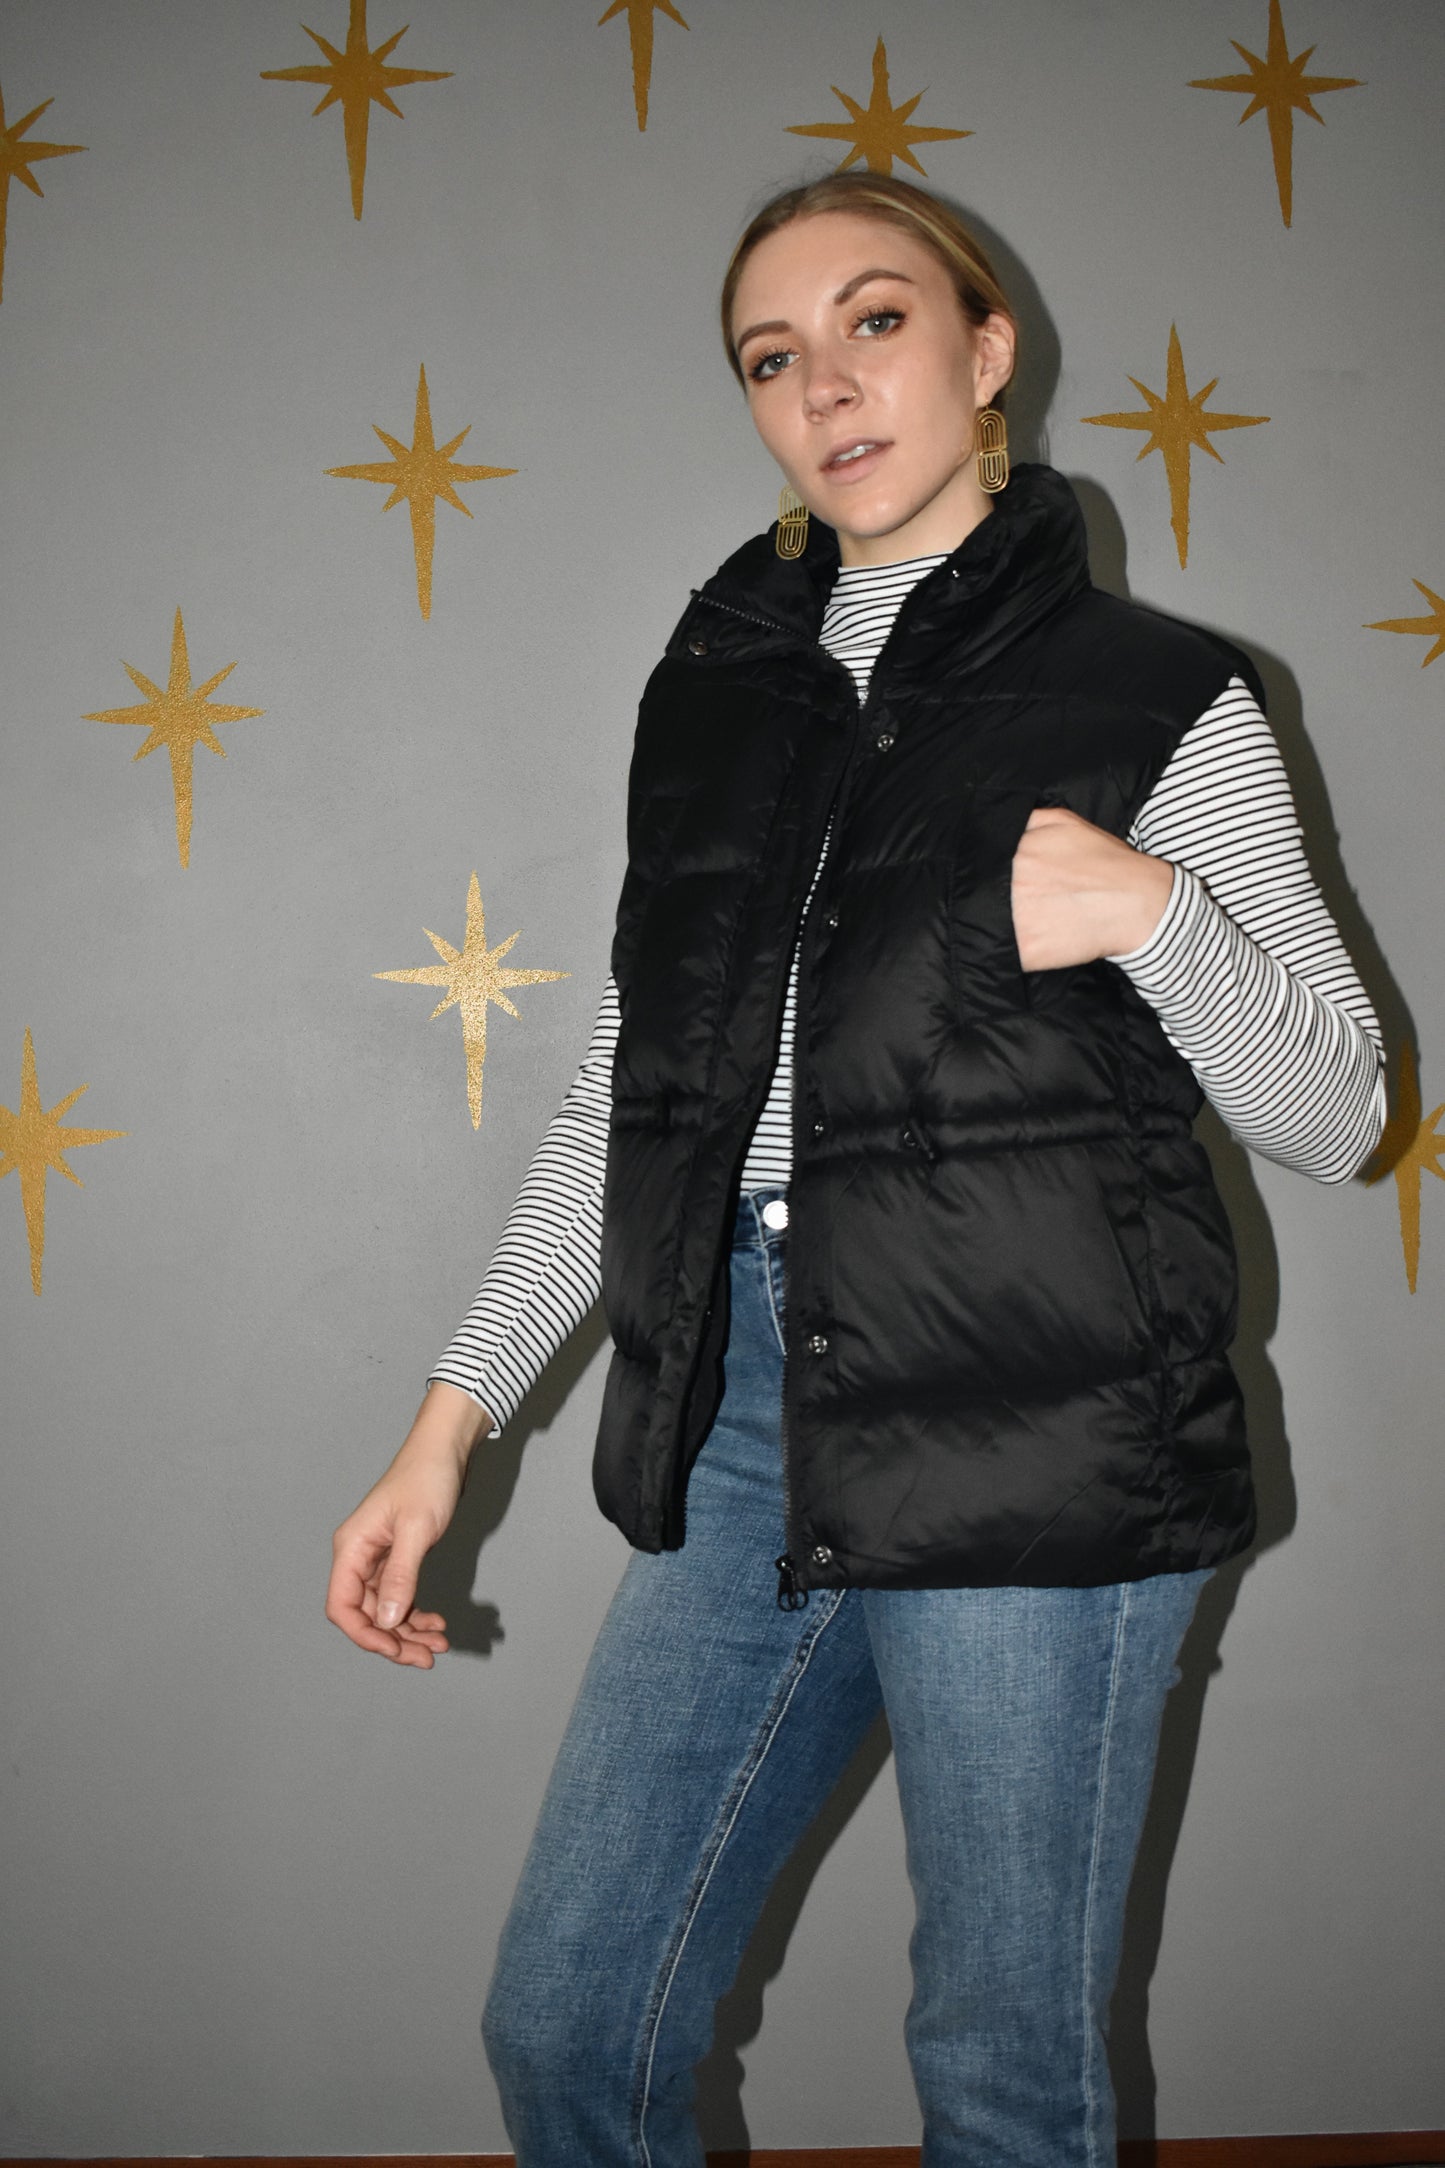 Lightweight zip up puffer vest with sinch drawstring around waist for adjustable fit. 4 pockets. Black.